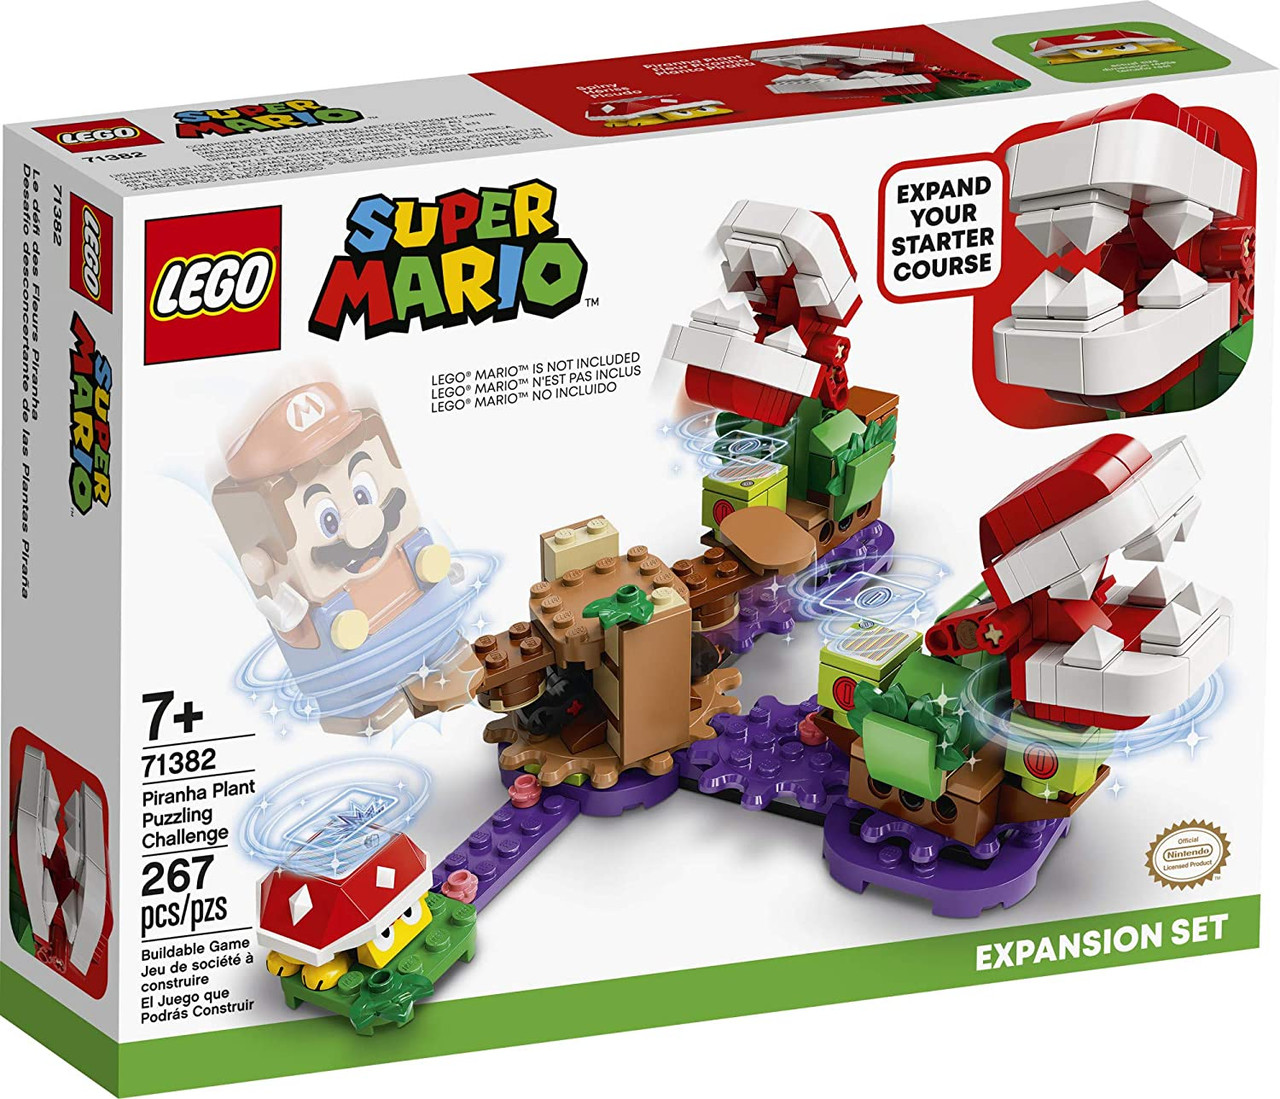 Lego Super Mario Toy, Piranha Plant Puzzling Challenge, Expansion Set